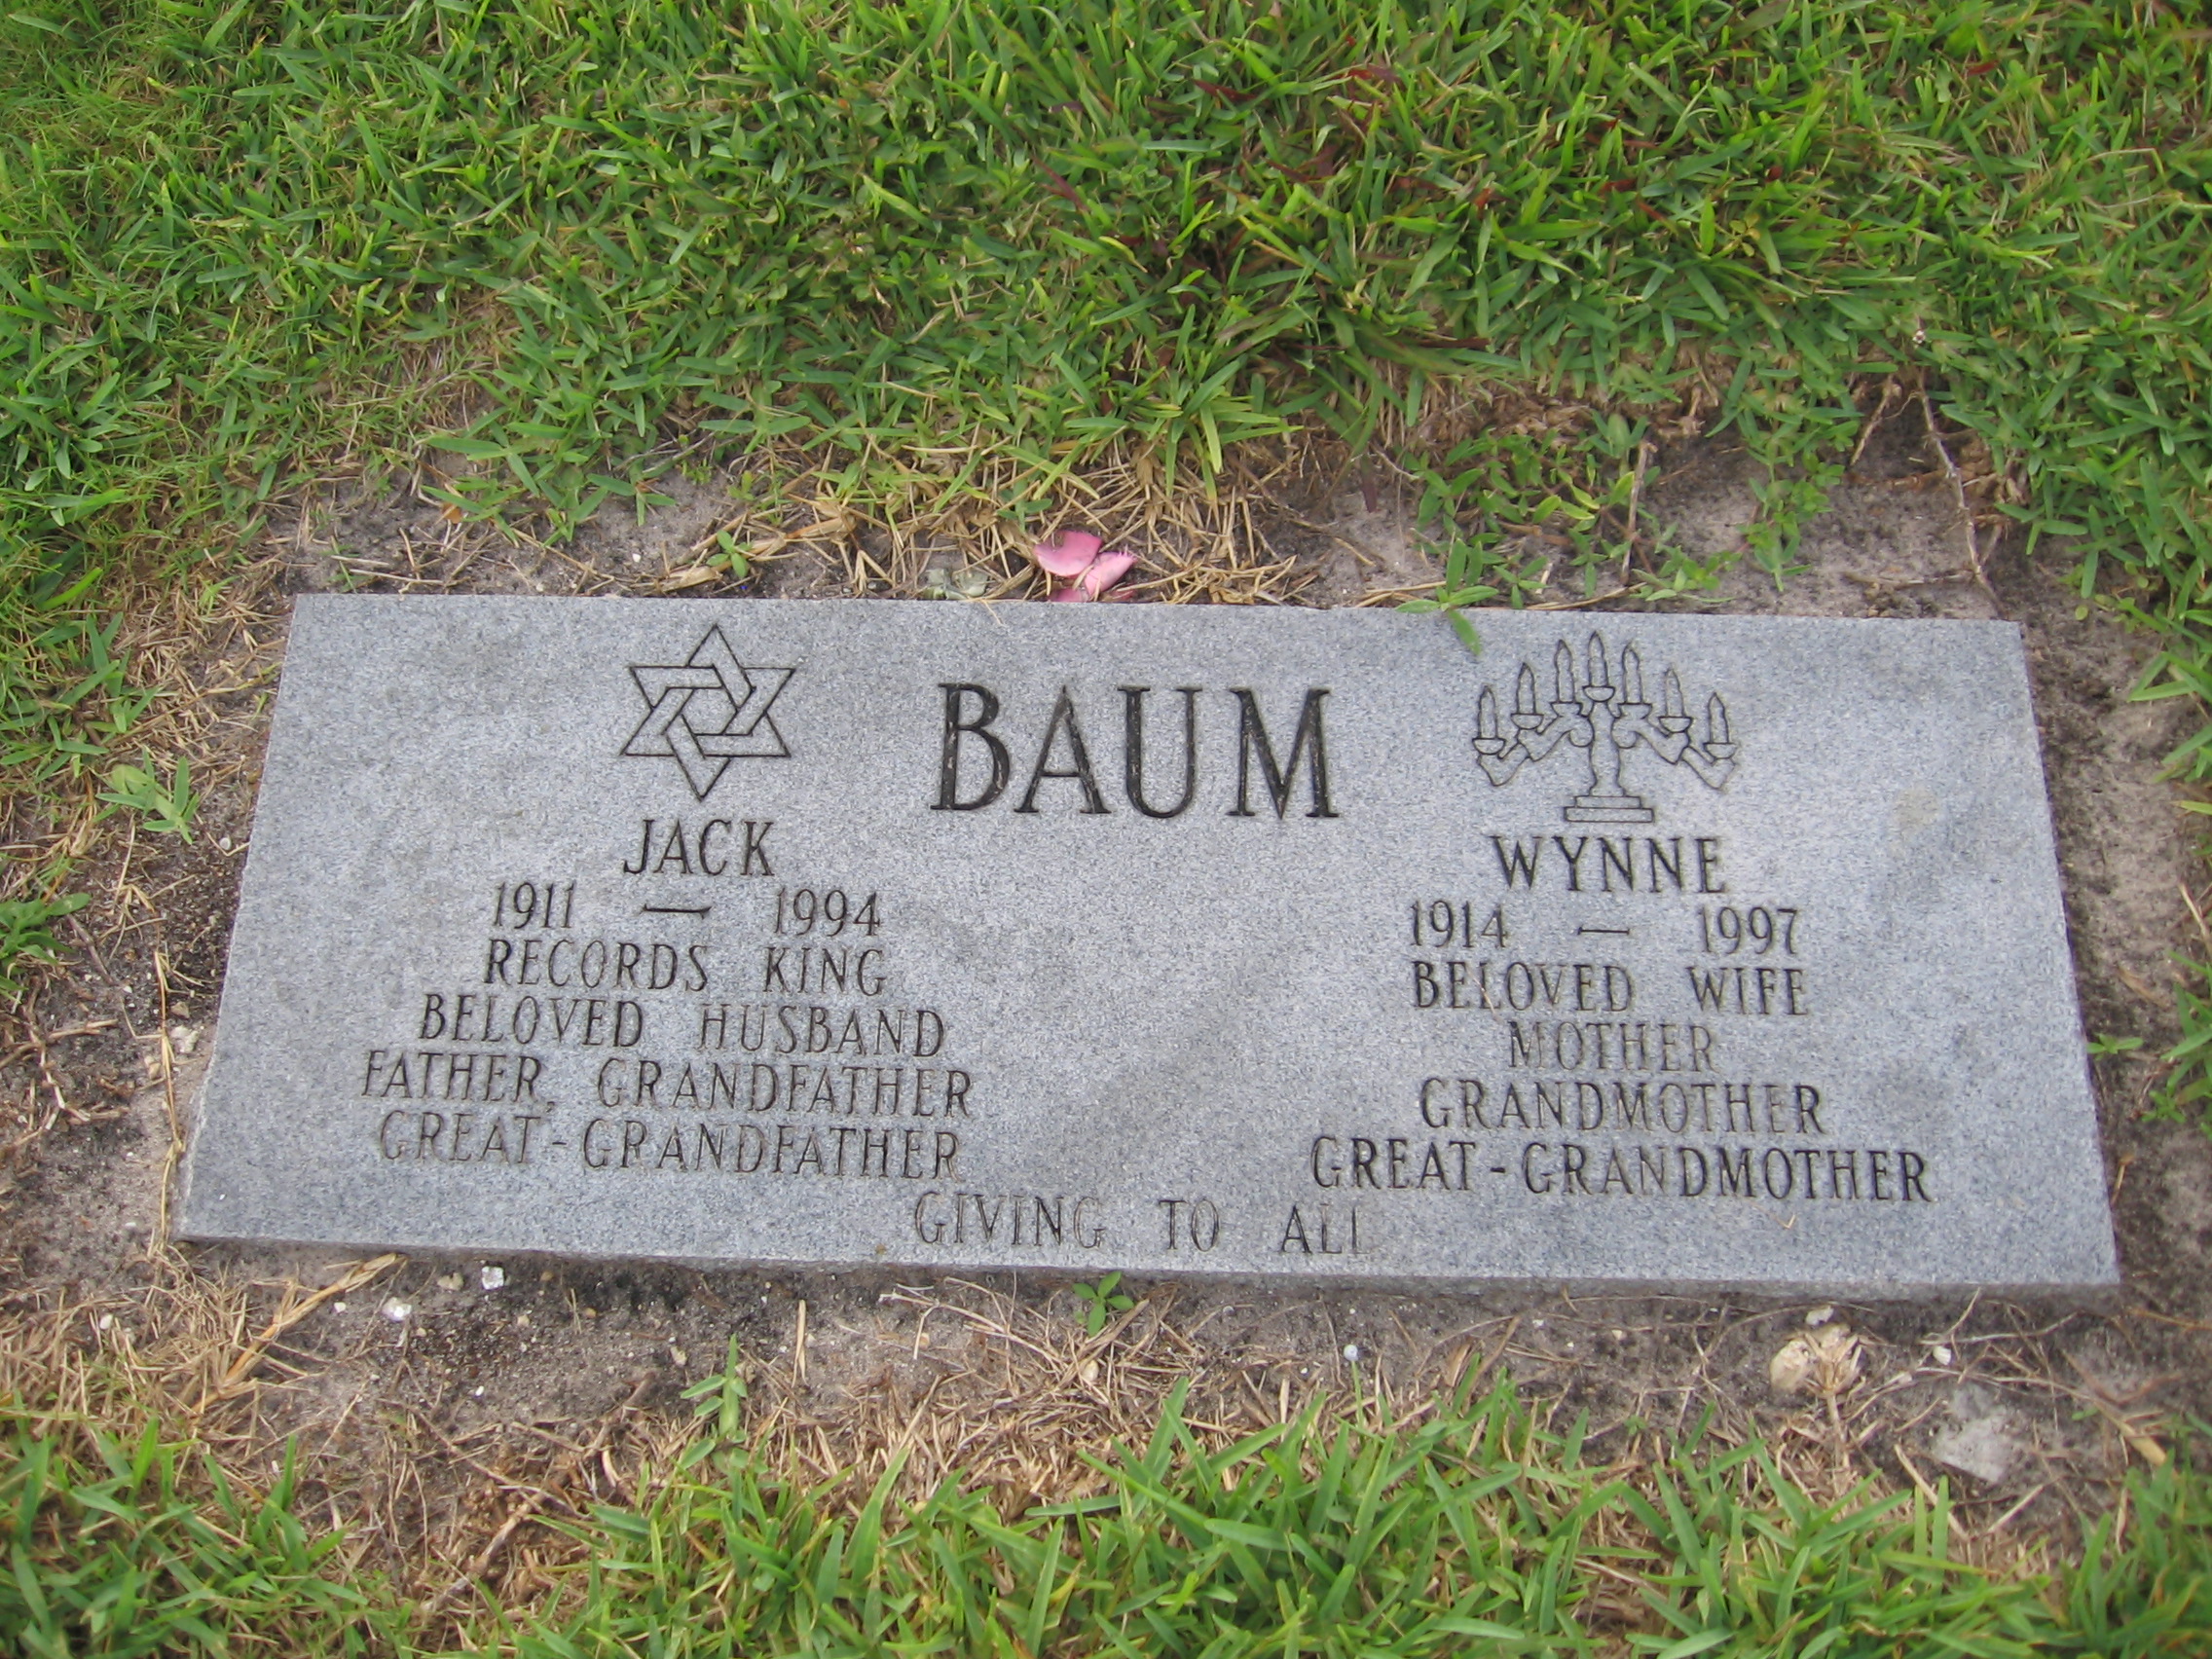 Jack Baum